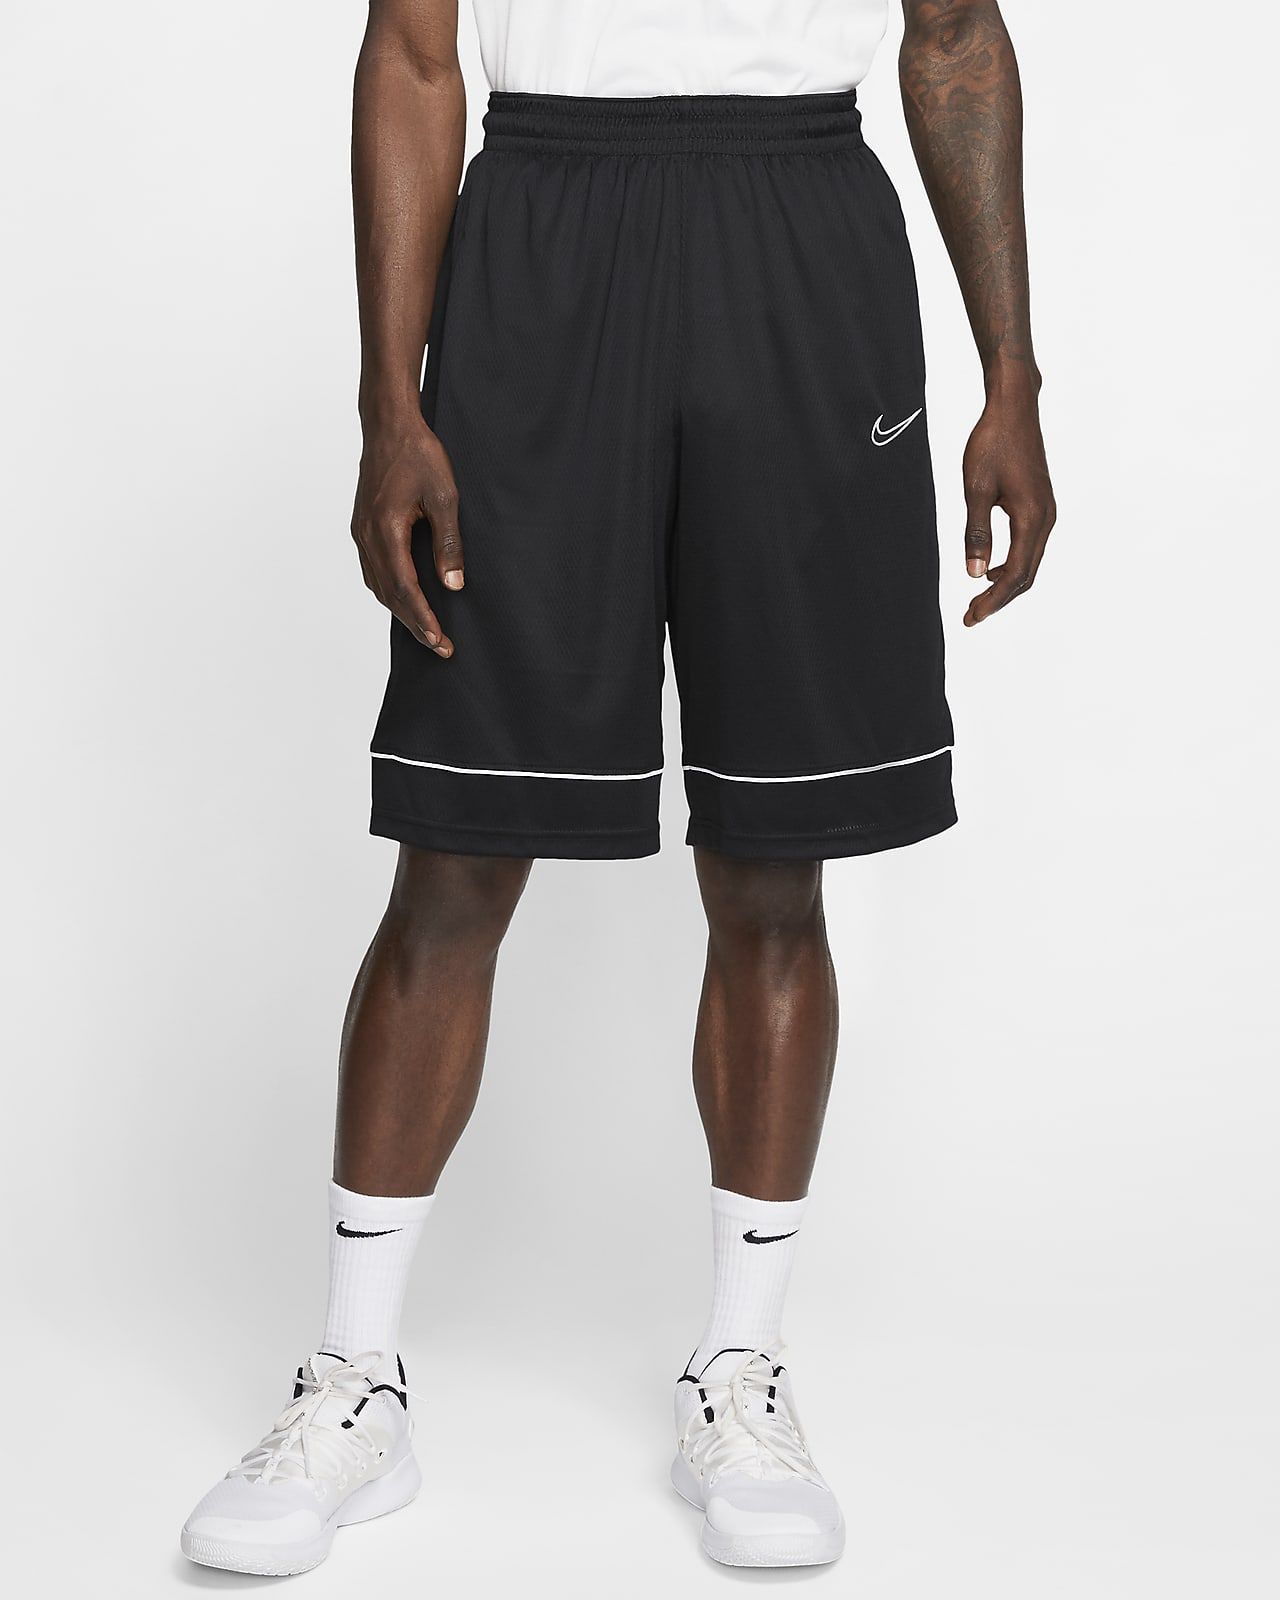 Nike Men's Basketball Shorts. Nike.com | Nike (US)